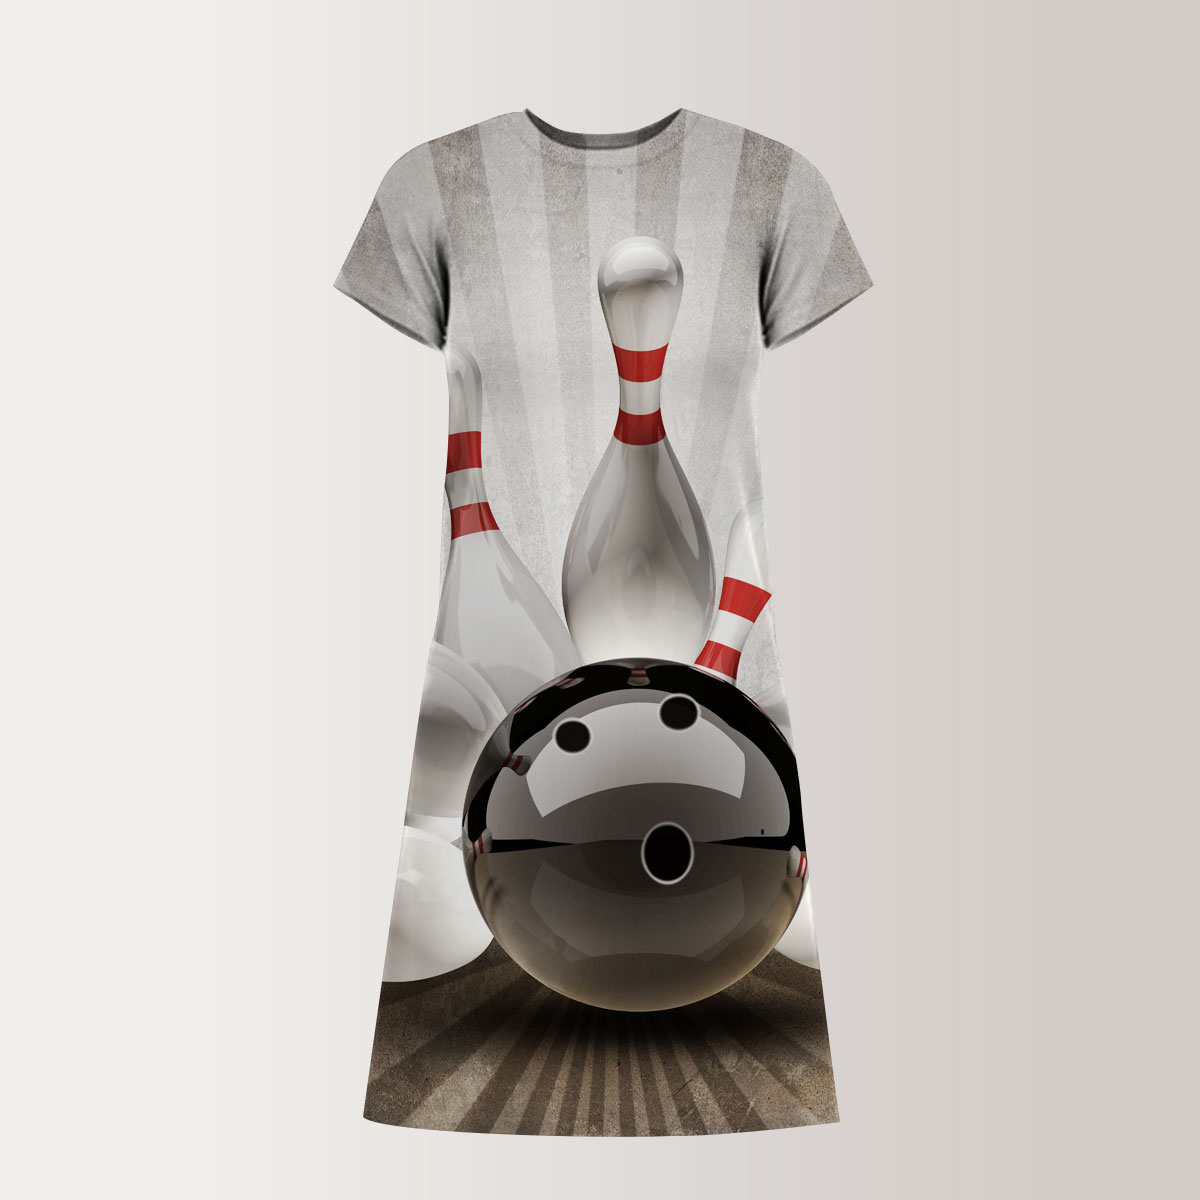 Vintage Bowling T-Shirt Dress